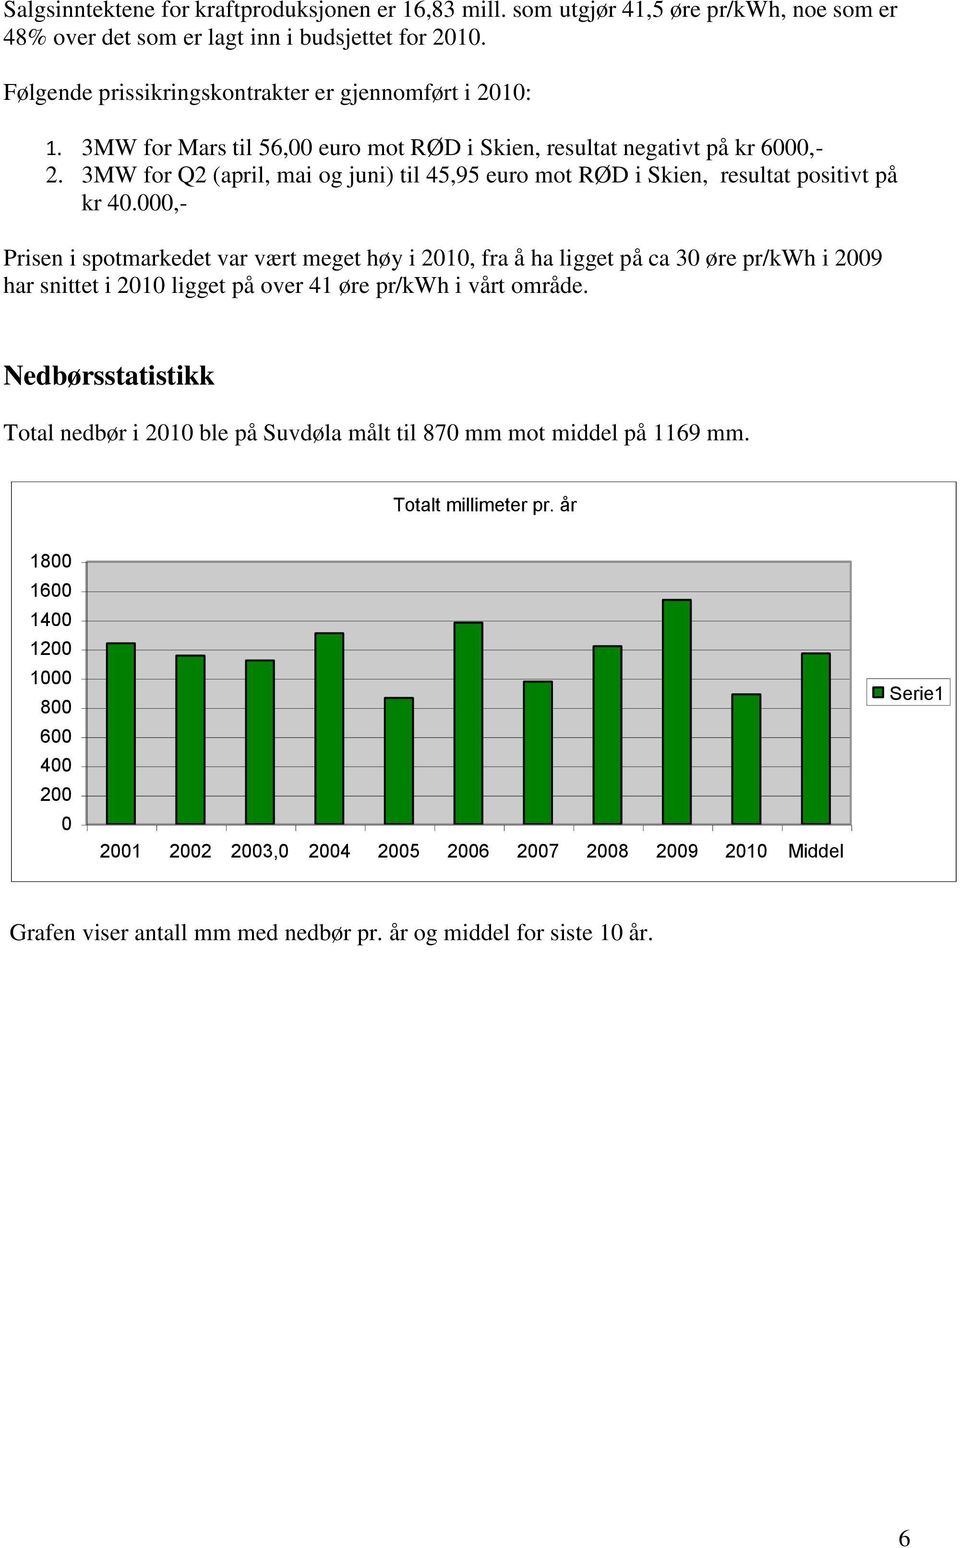 3MW for Q2 (april, mai og juni) til 45,95 euro mot RØD i Skien, resultat positivt på kr 40.